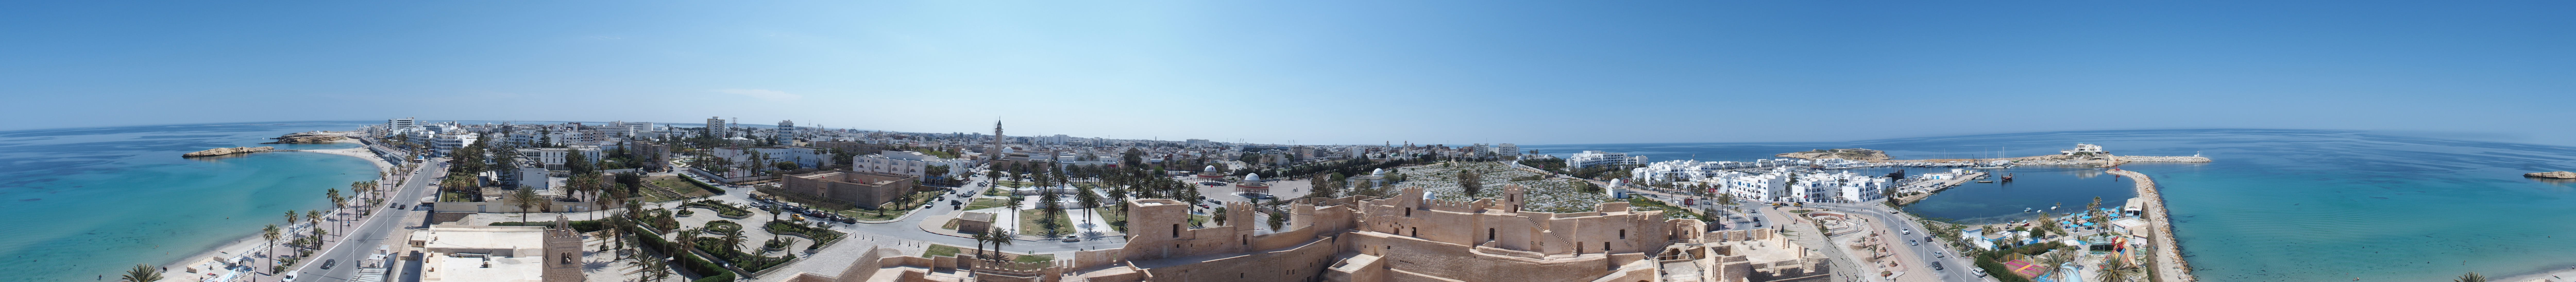 Panorama von Monastir